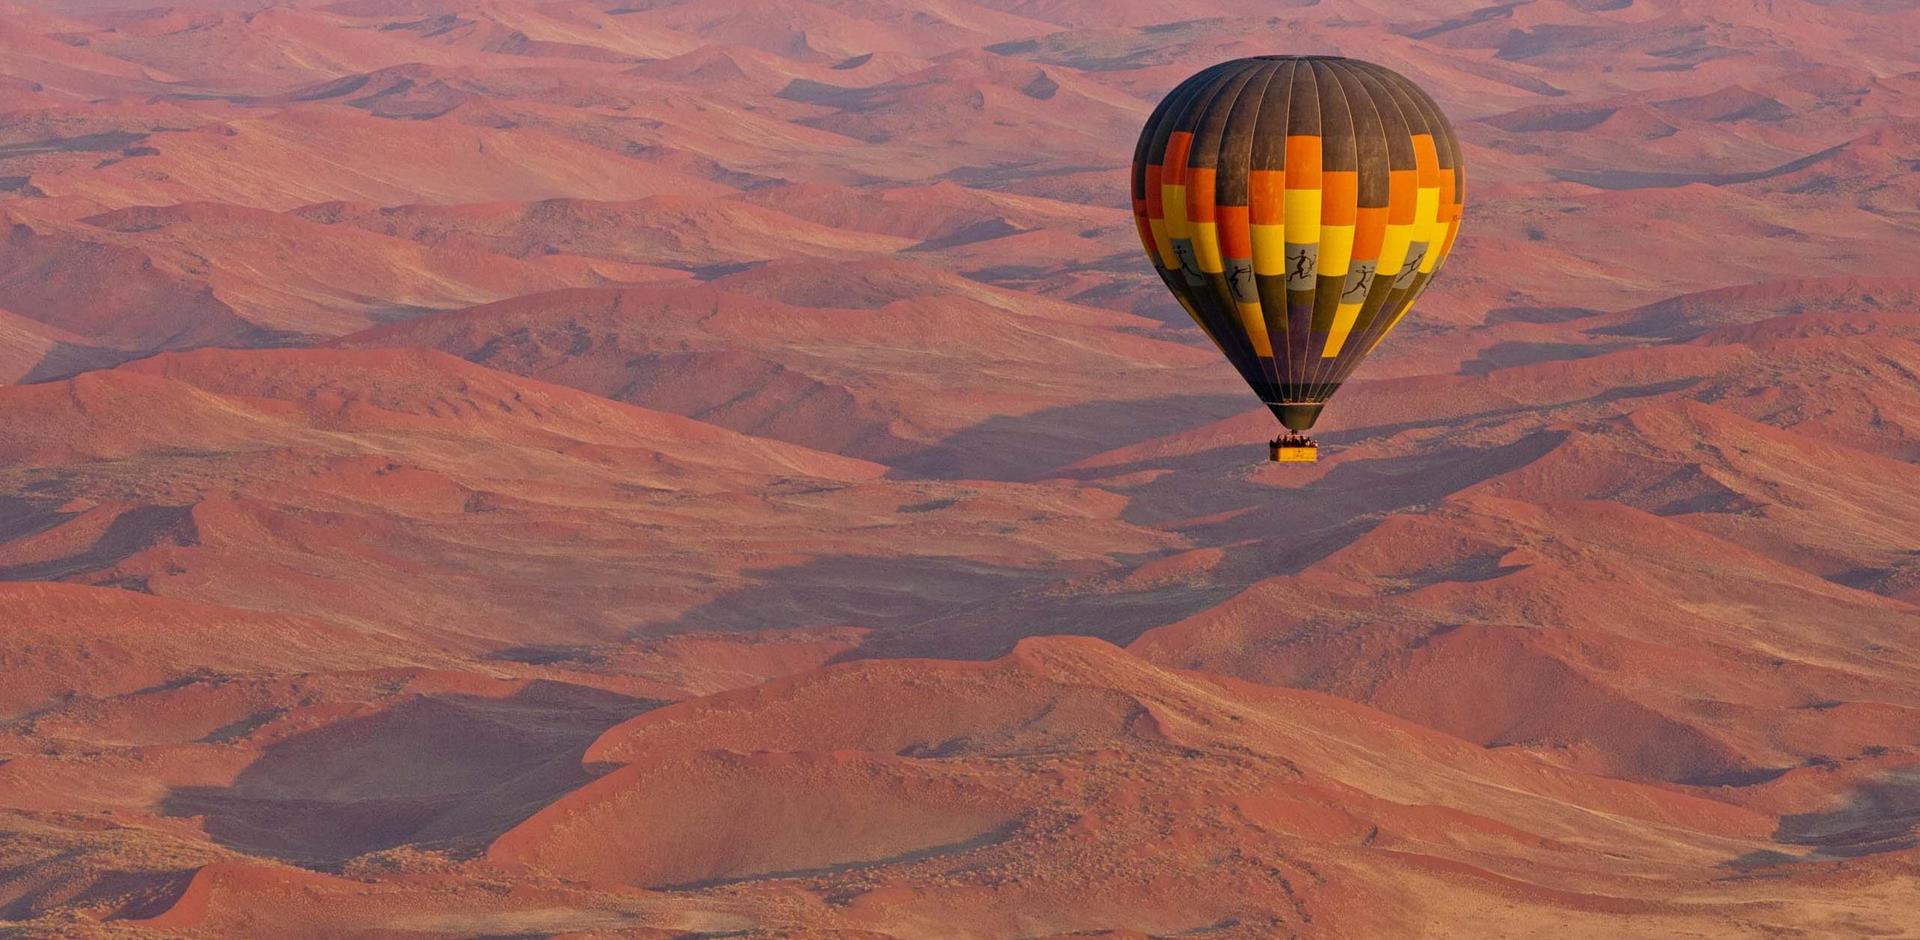 A&K Namibia experience: Balloon ride over Kulala